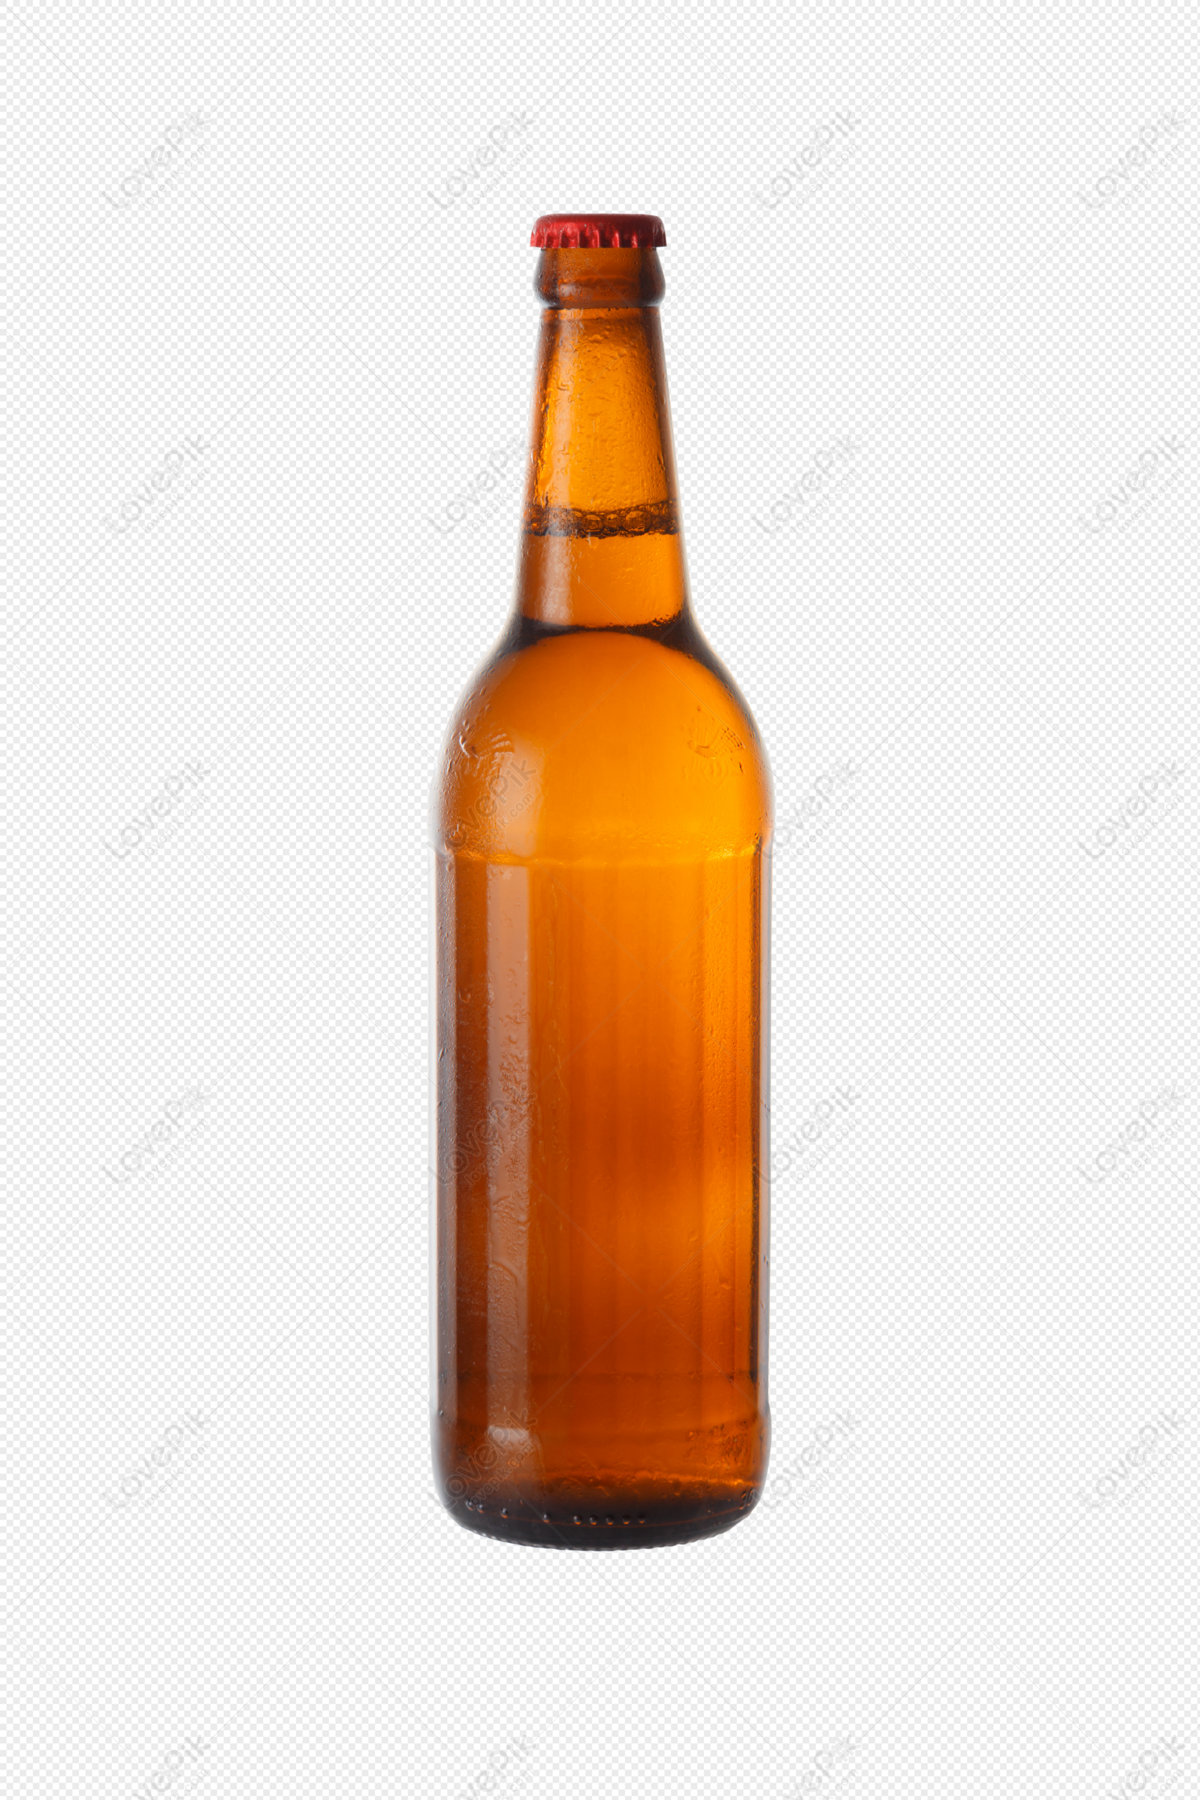 Beer Bottle Clipart - Clipart Kid | Bottle drawing, Beer bottle drawing,  Beer logo